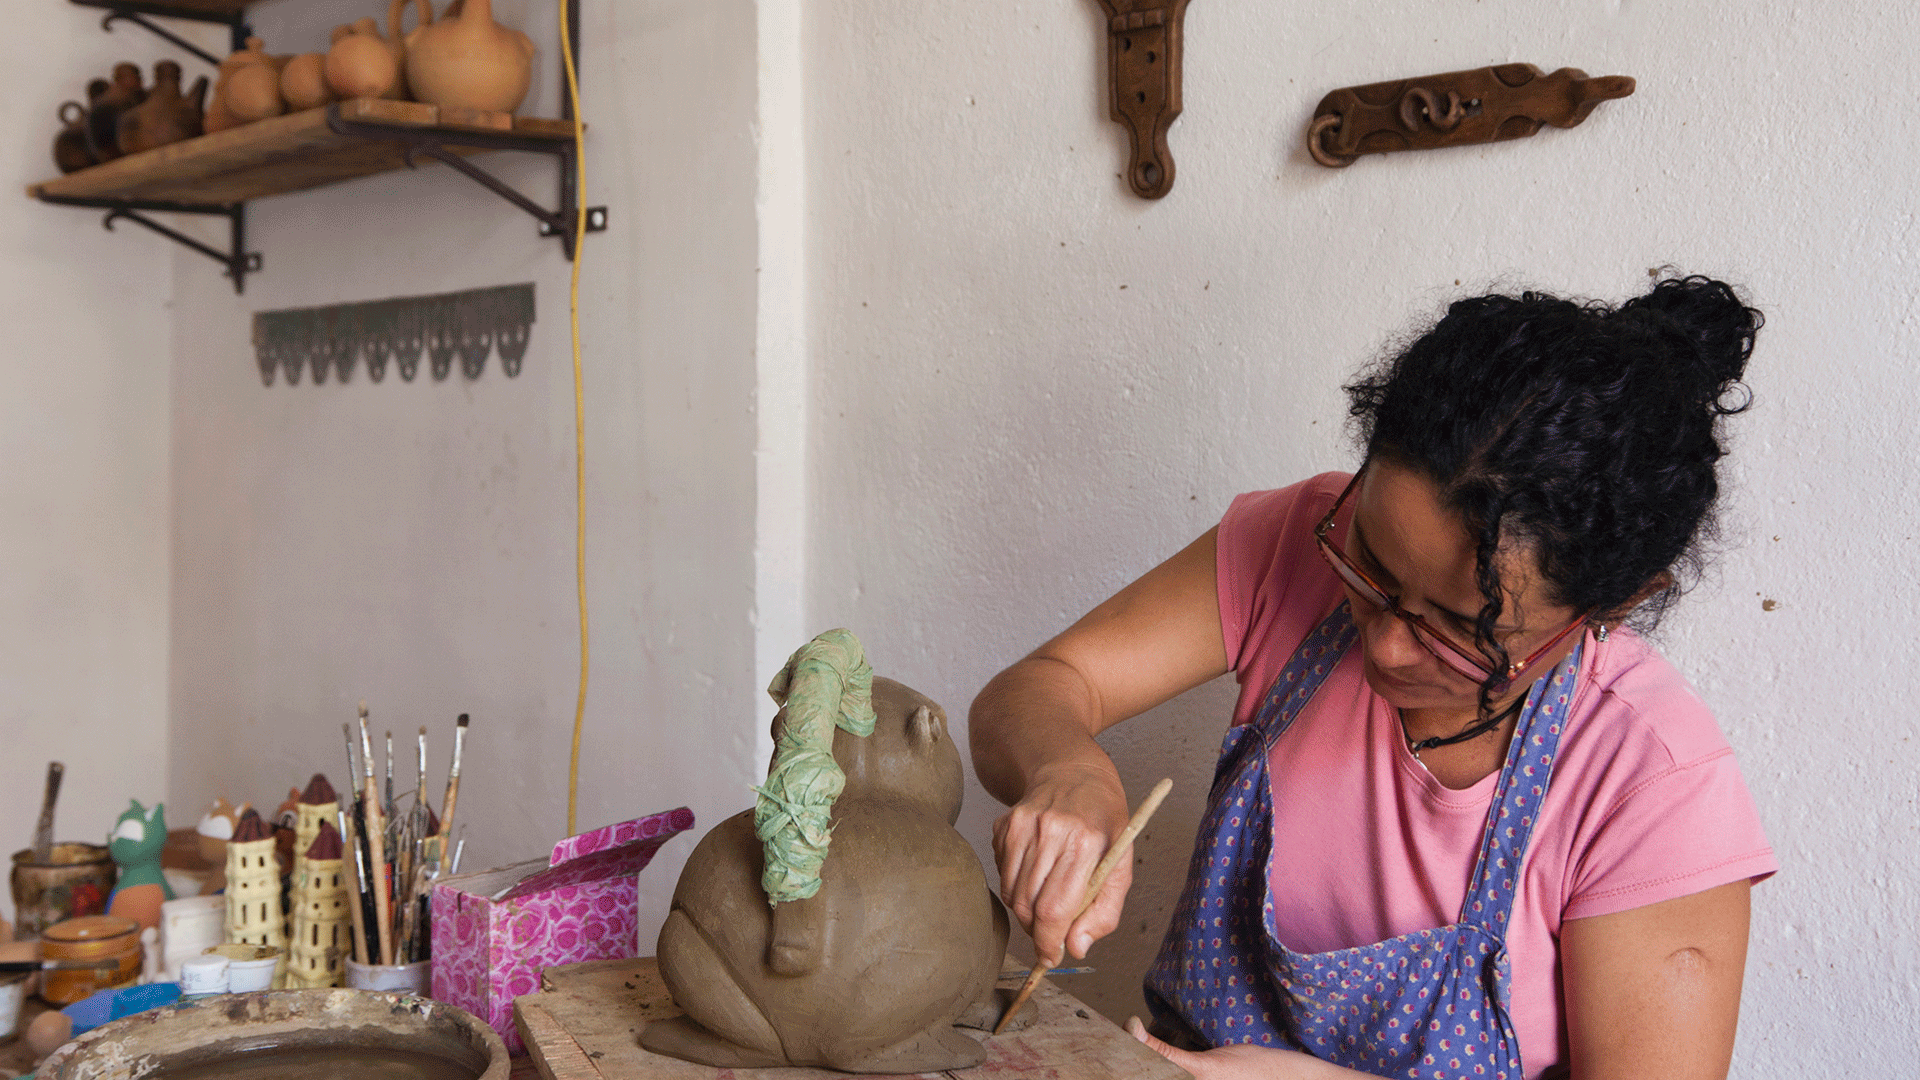 Pottery studio in Cuba